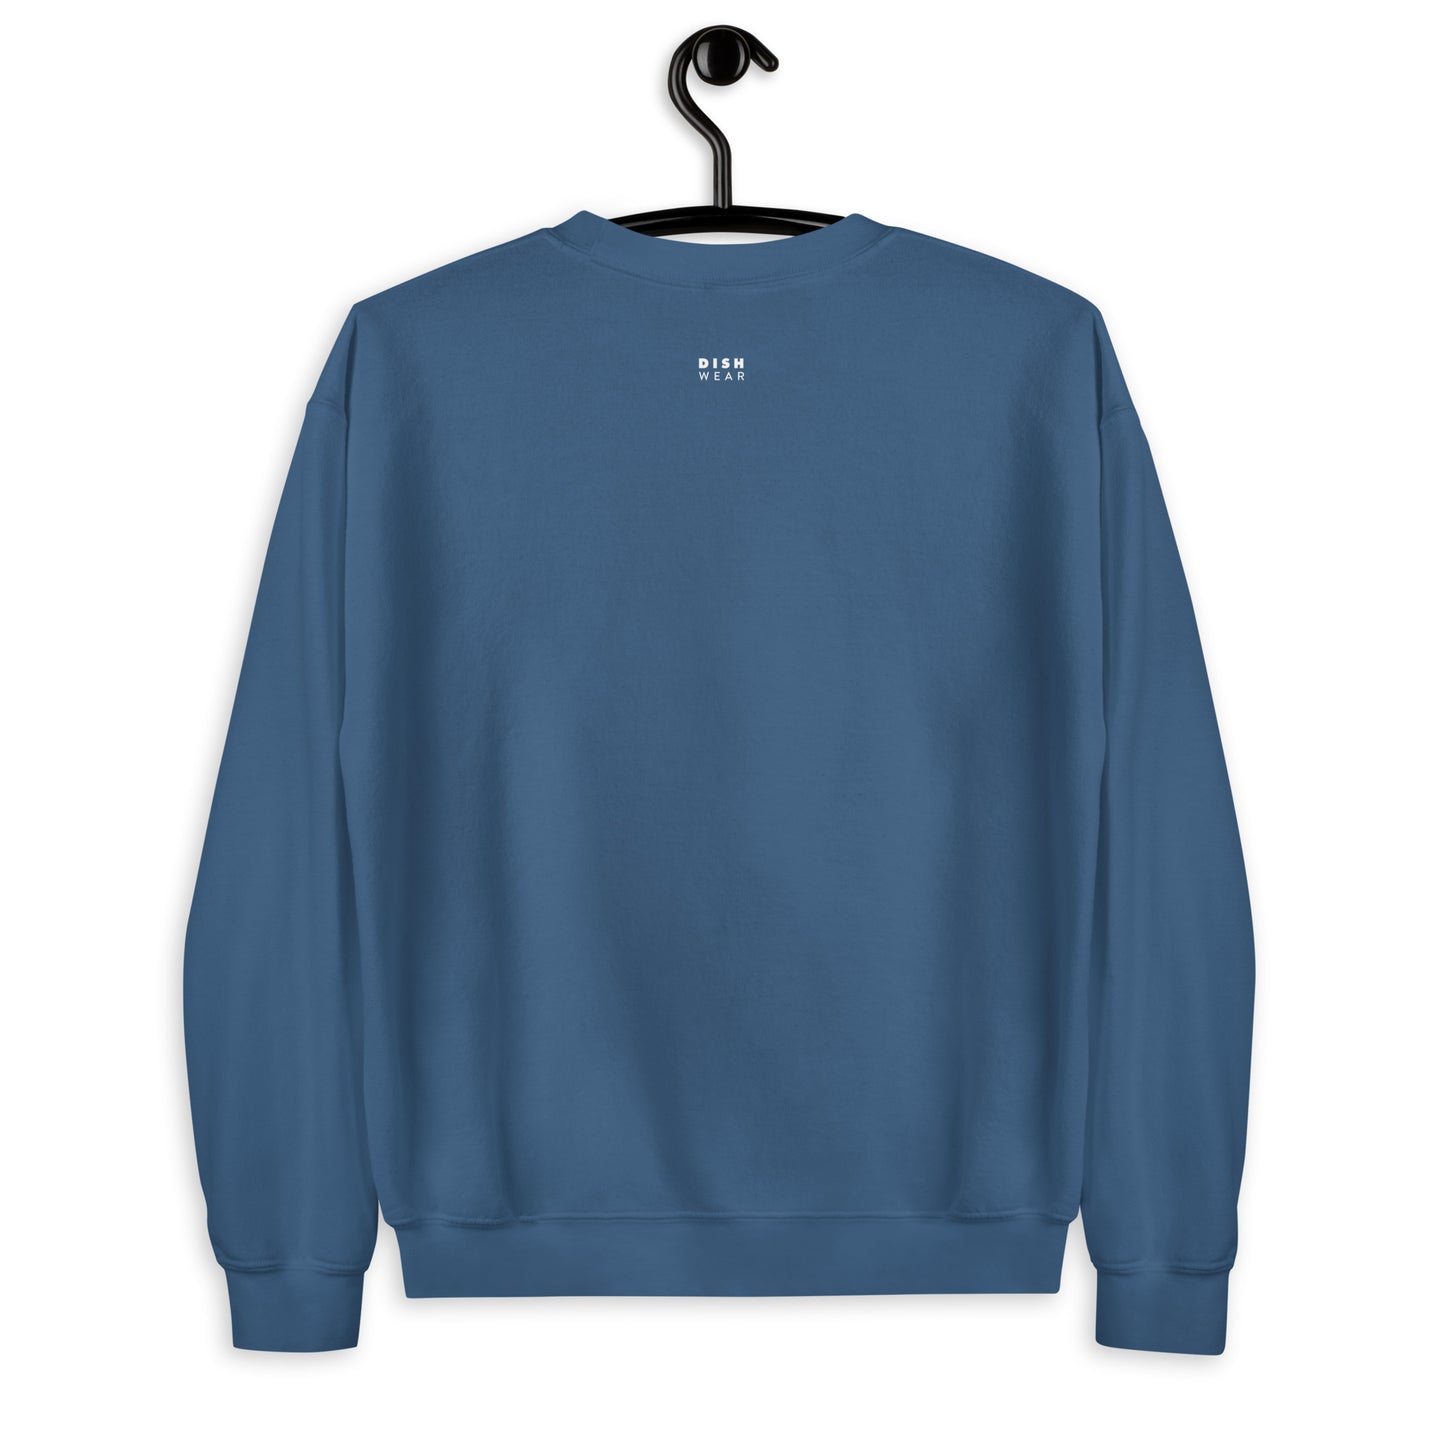 Croquembouche Sweatshirt - Straight Font